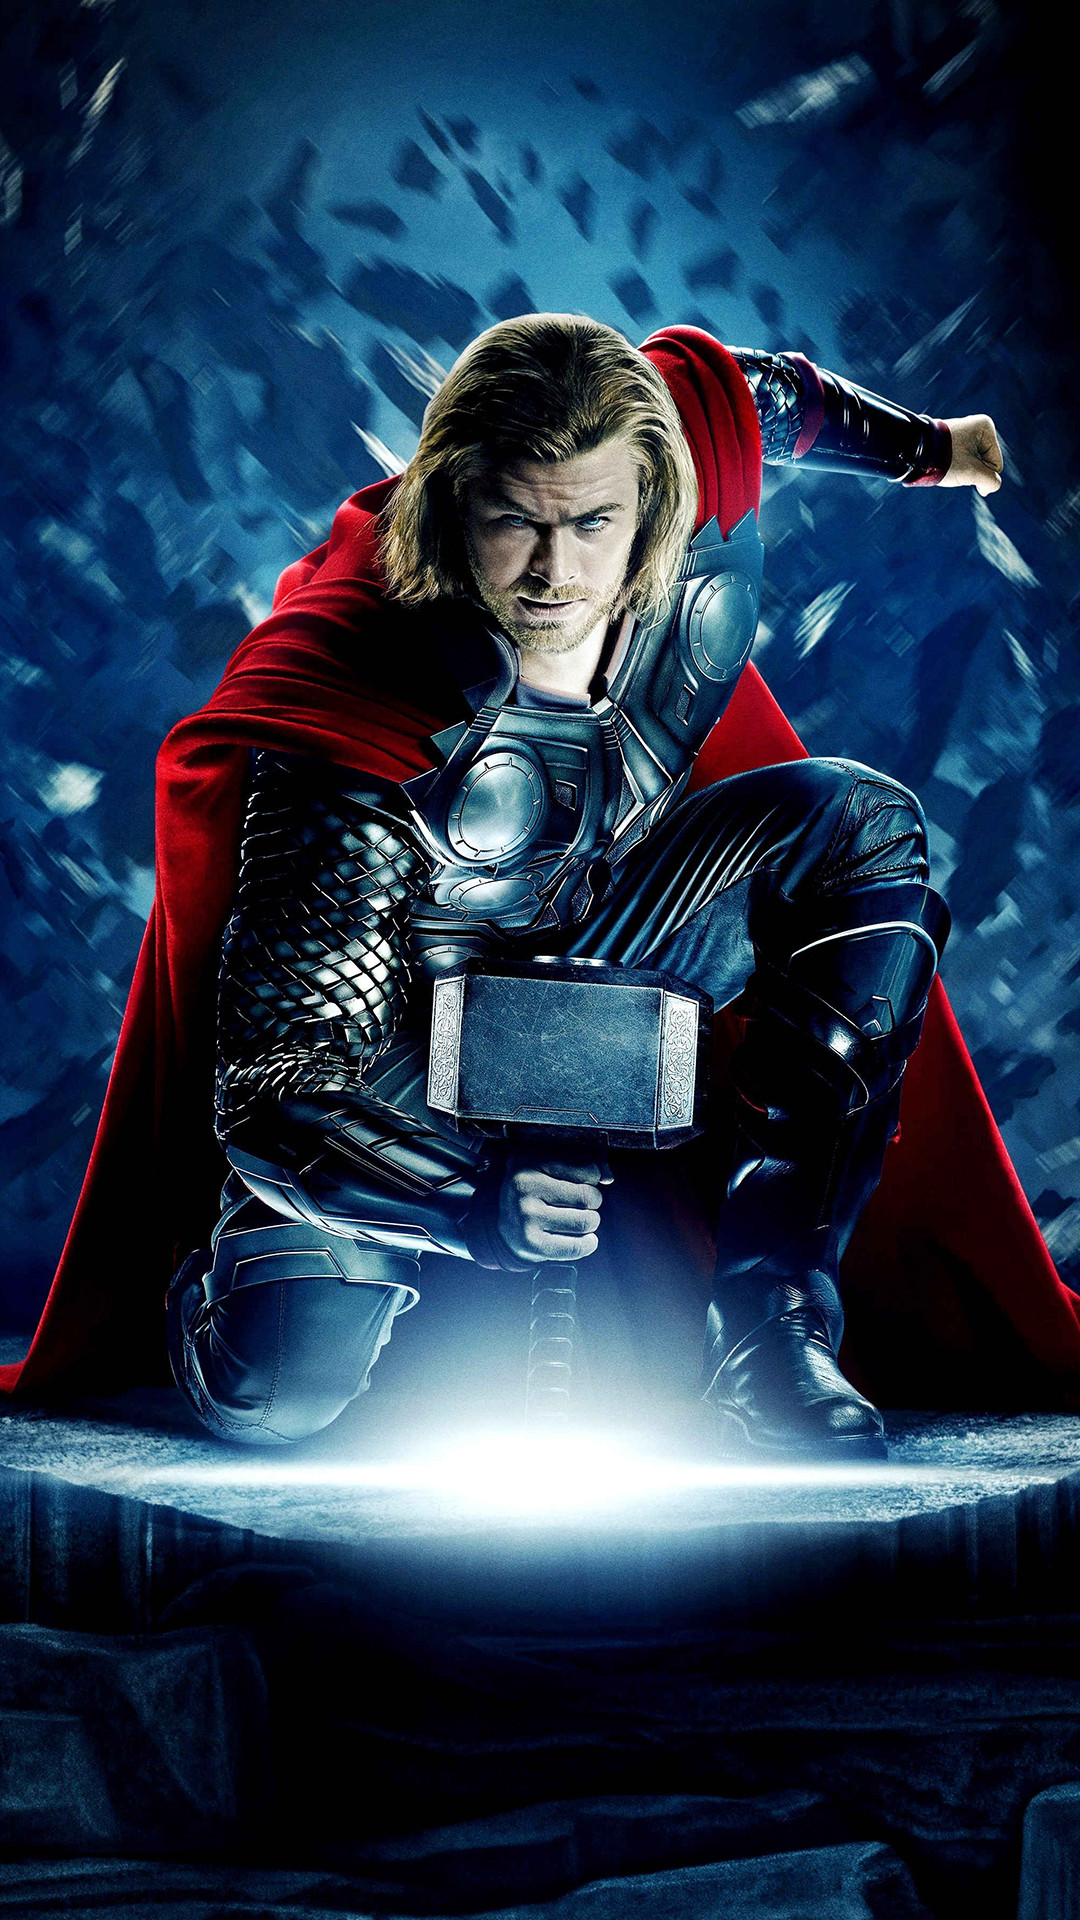 1080x1920 Thor The dark world htc one wallpaper